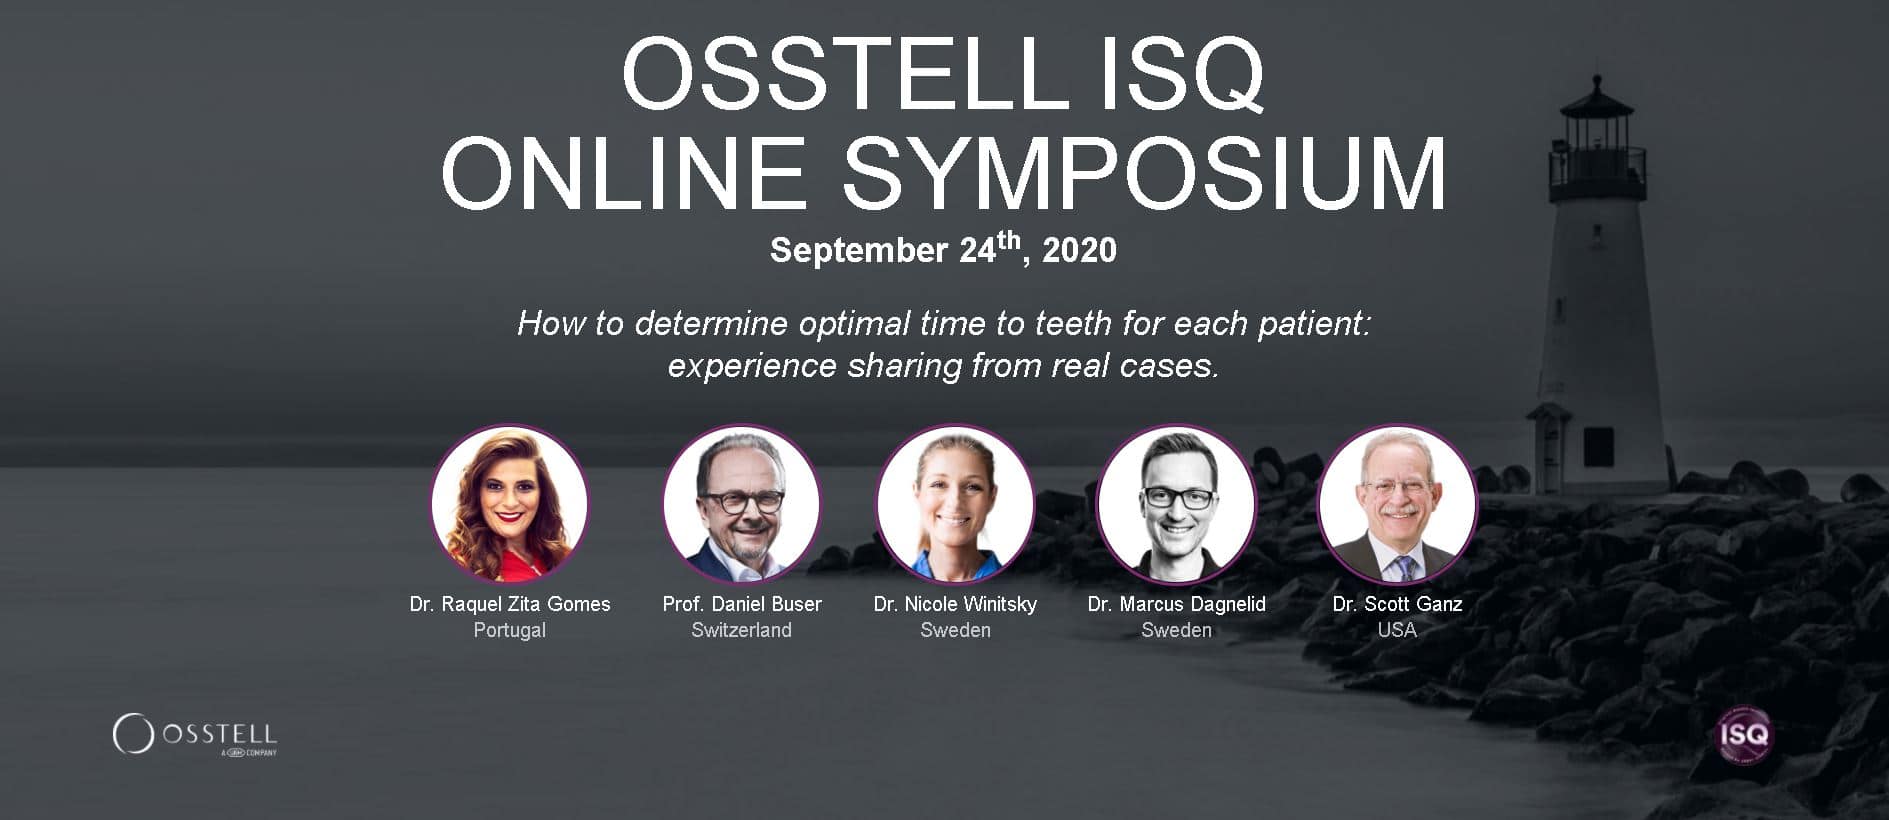 Osstell ISQ Online Symposium